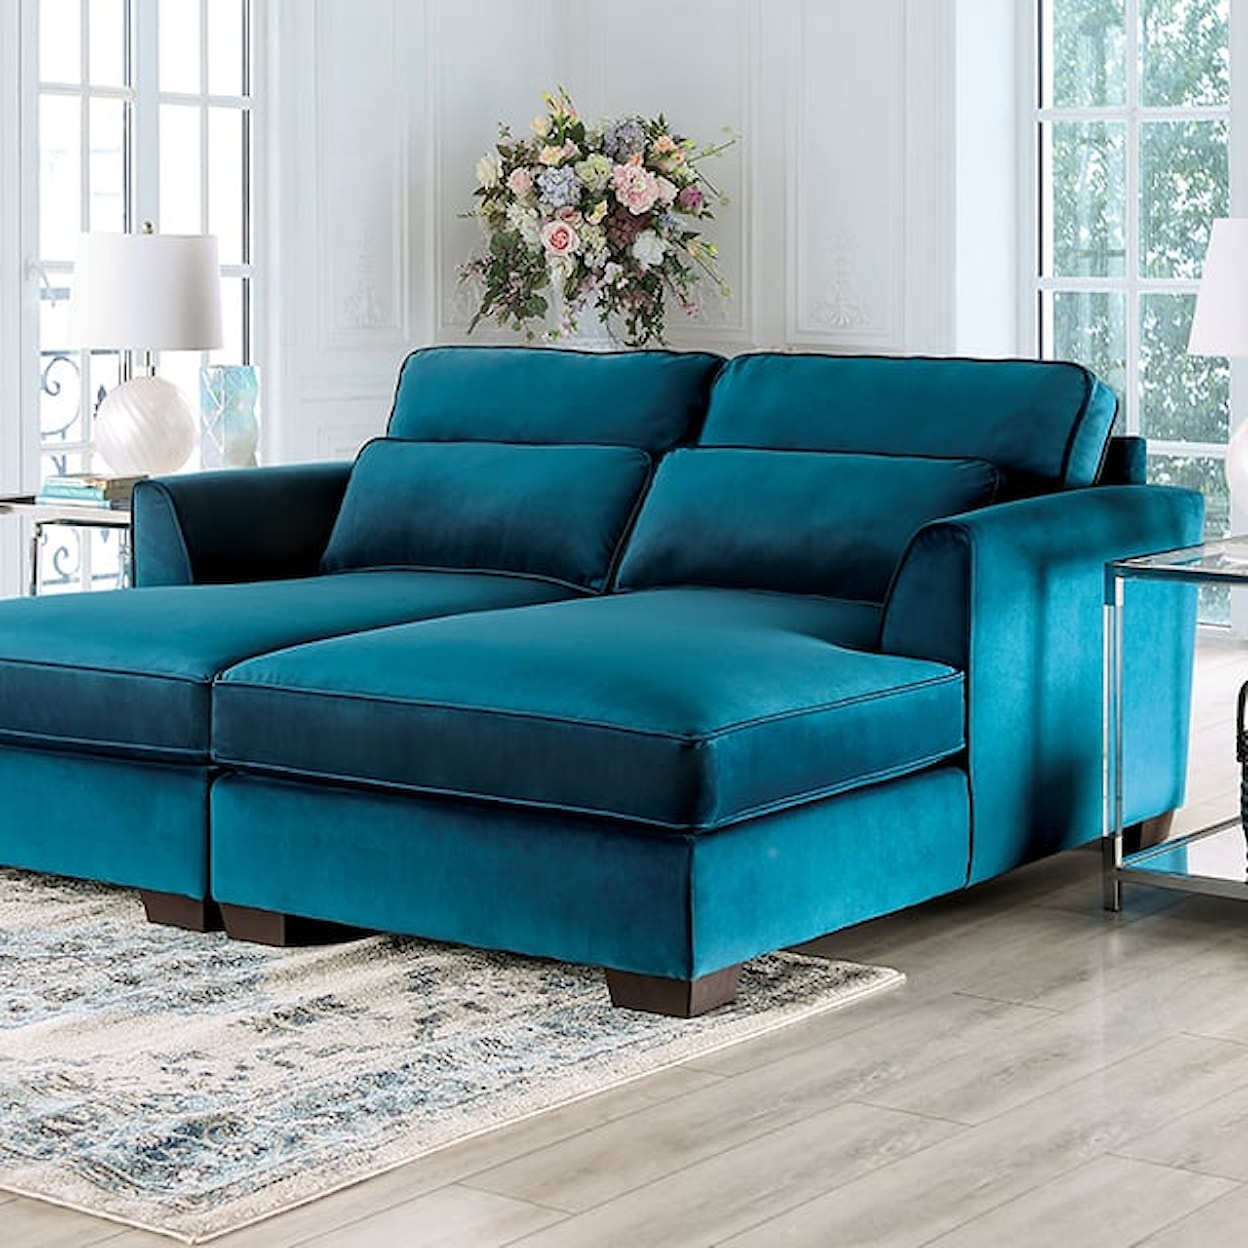 Furniture of America Peregrine Sectional Sofa